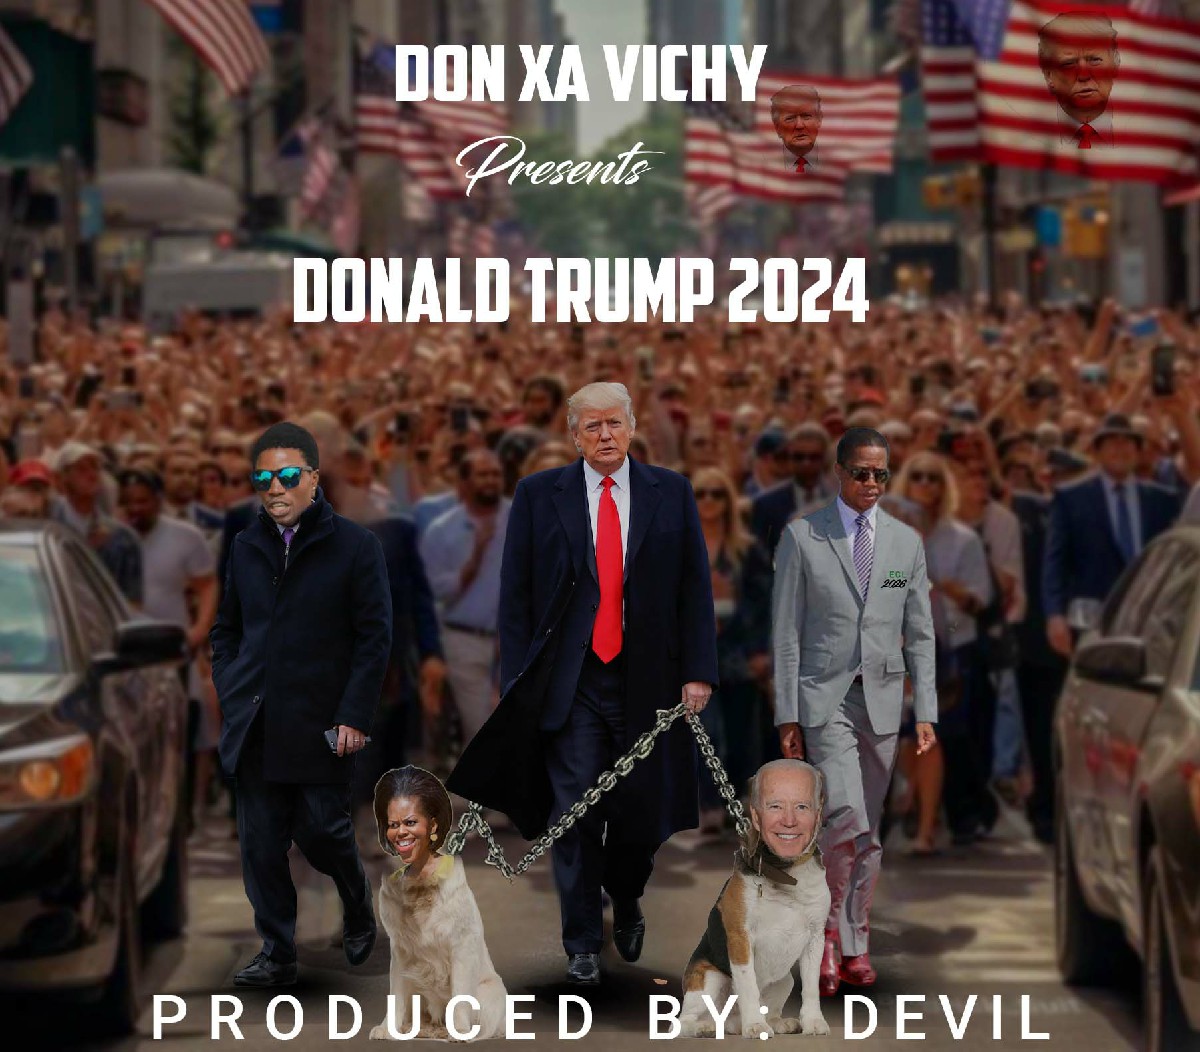 Don Xa Vichy - Donald Trump 2024 (Prod. Devil)